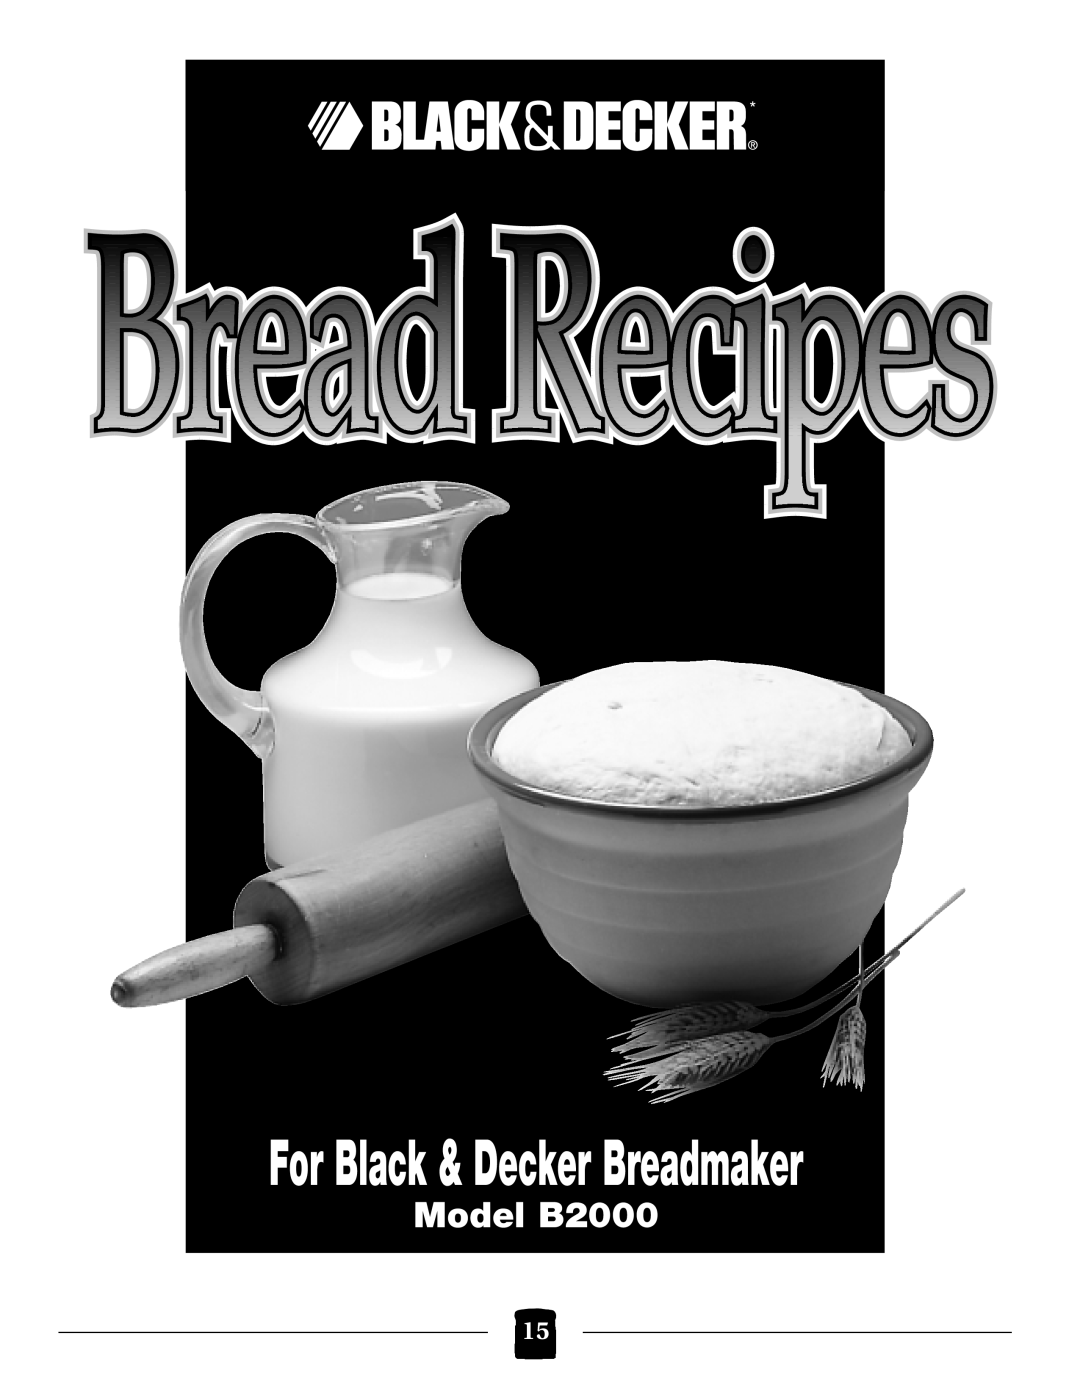 Black & Decker operating instructions For Black & Decker Breadmaker, Model B2000 